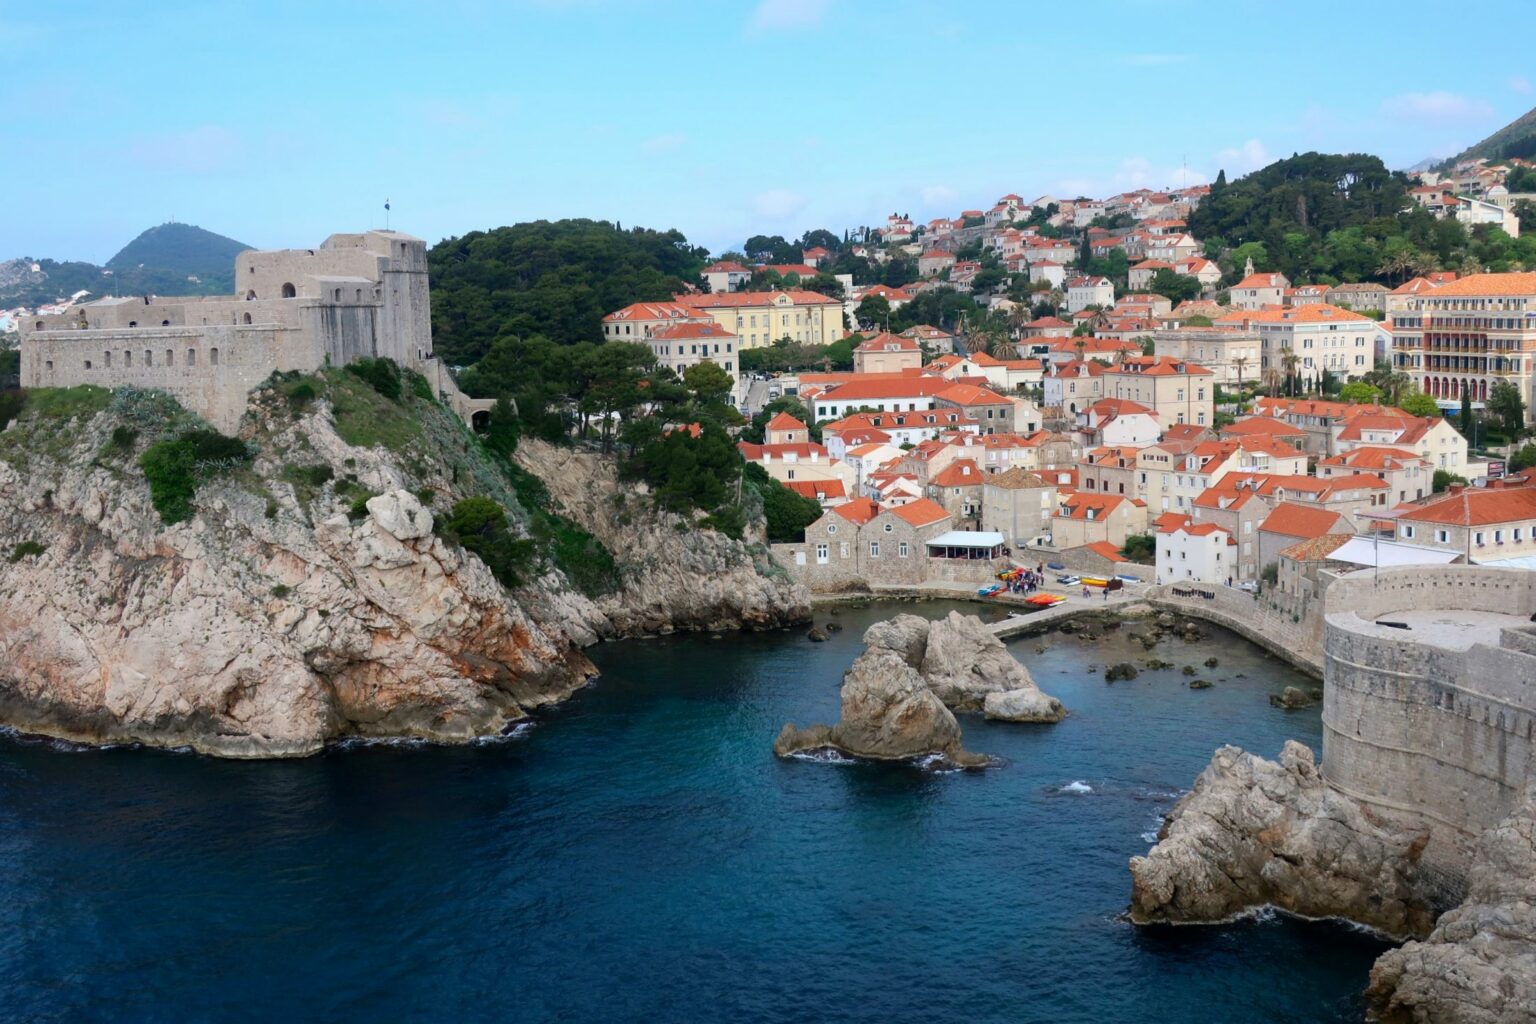 The Dalmatian Coast in Croatia - Wine producing regions around the world